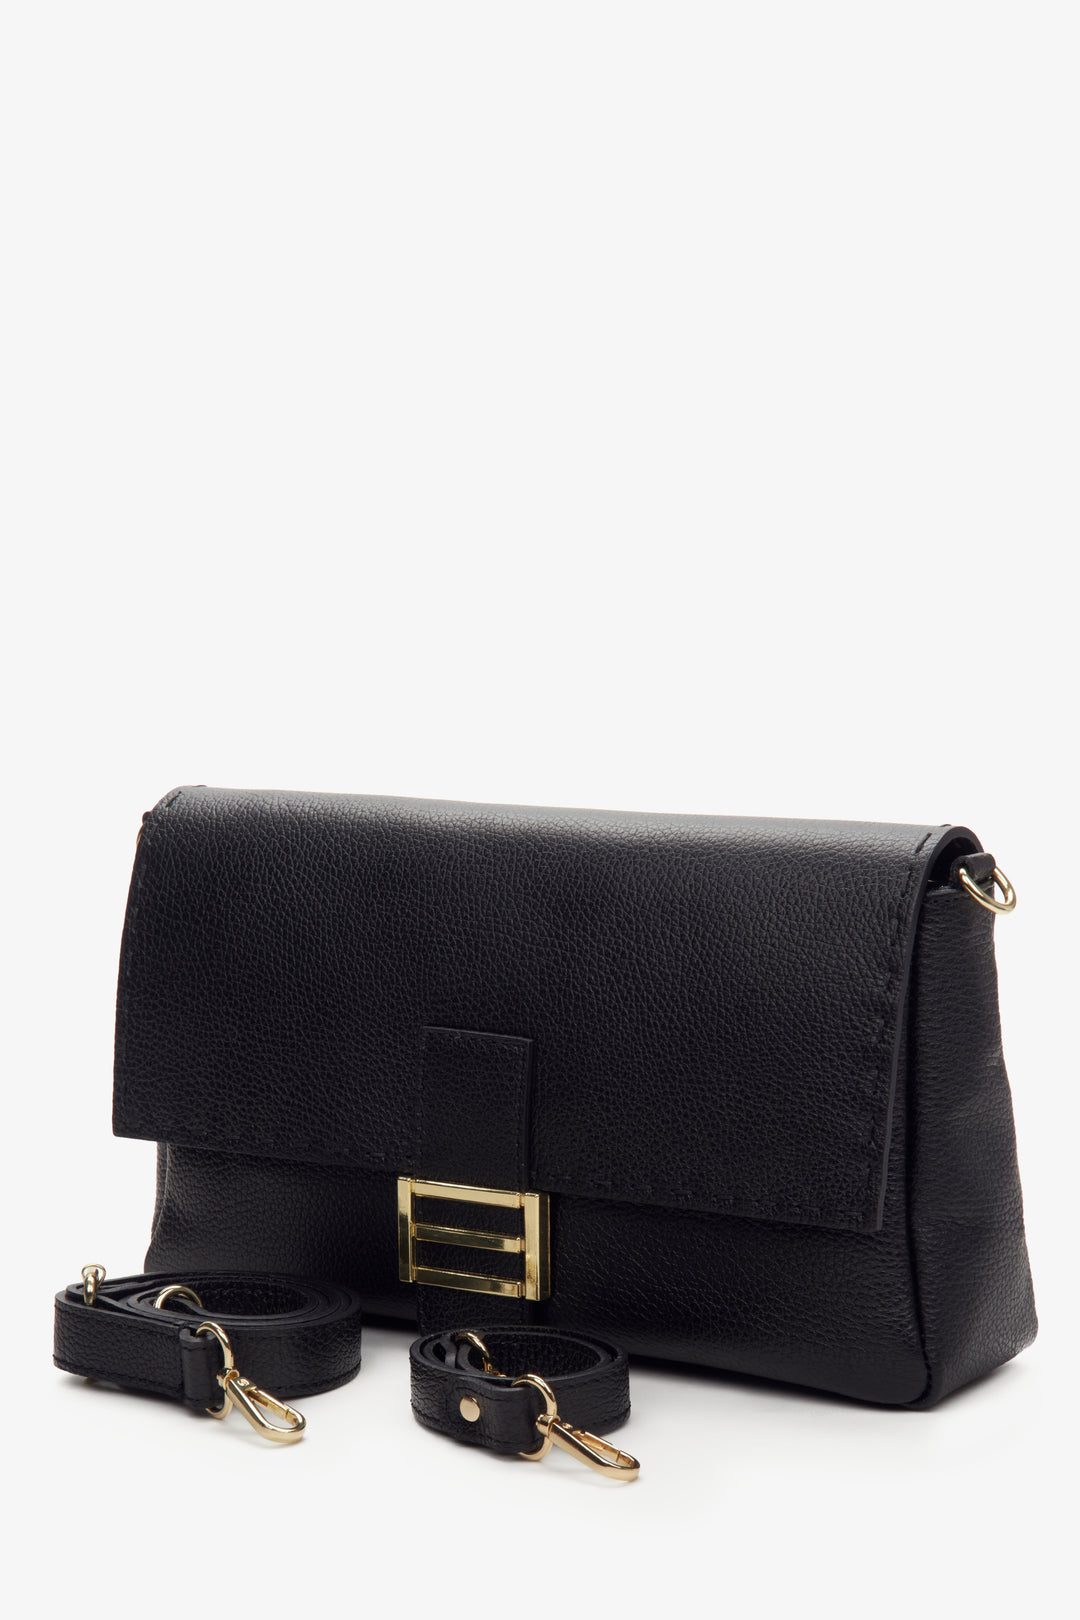 Women's black leather handbag by Estro with golden hardware.